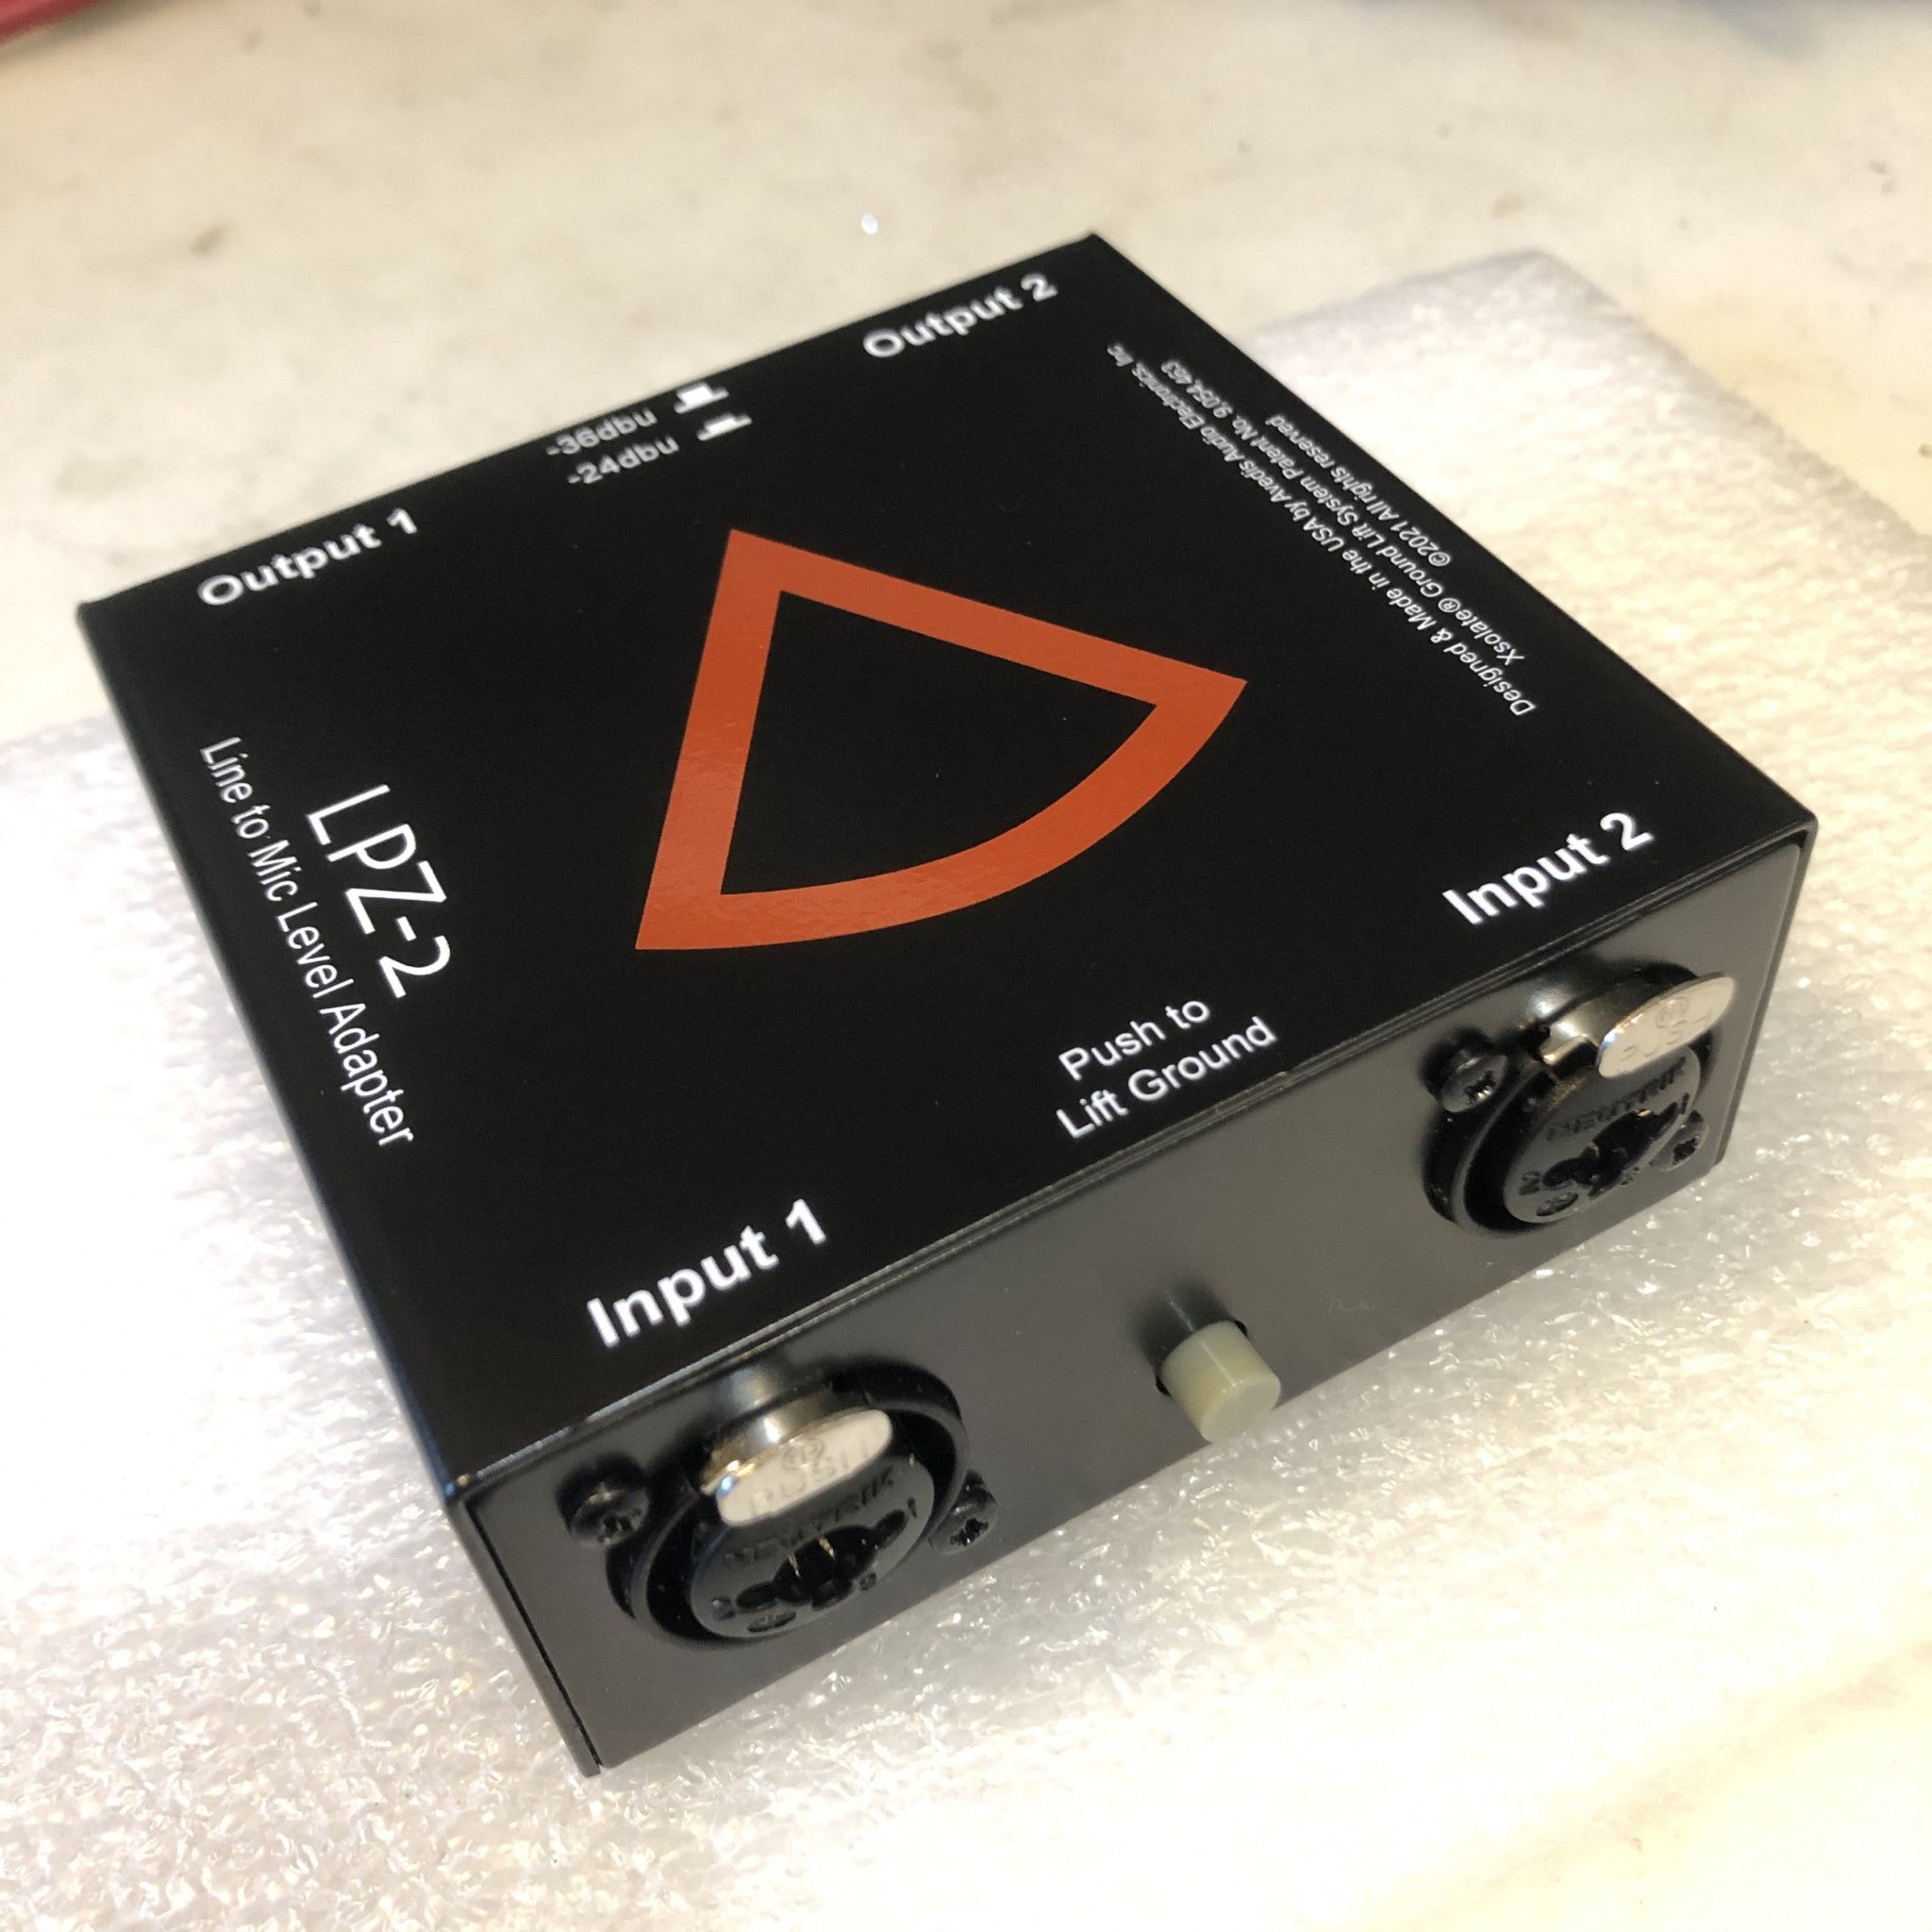 New Avedis Audio LPZ-2 Line to Mic Level Adapter DI Direct Box + Free XLR Cable!